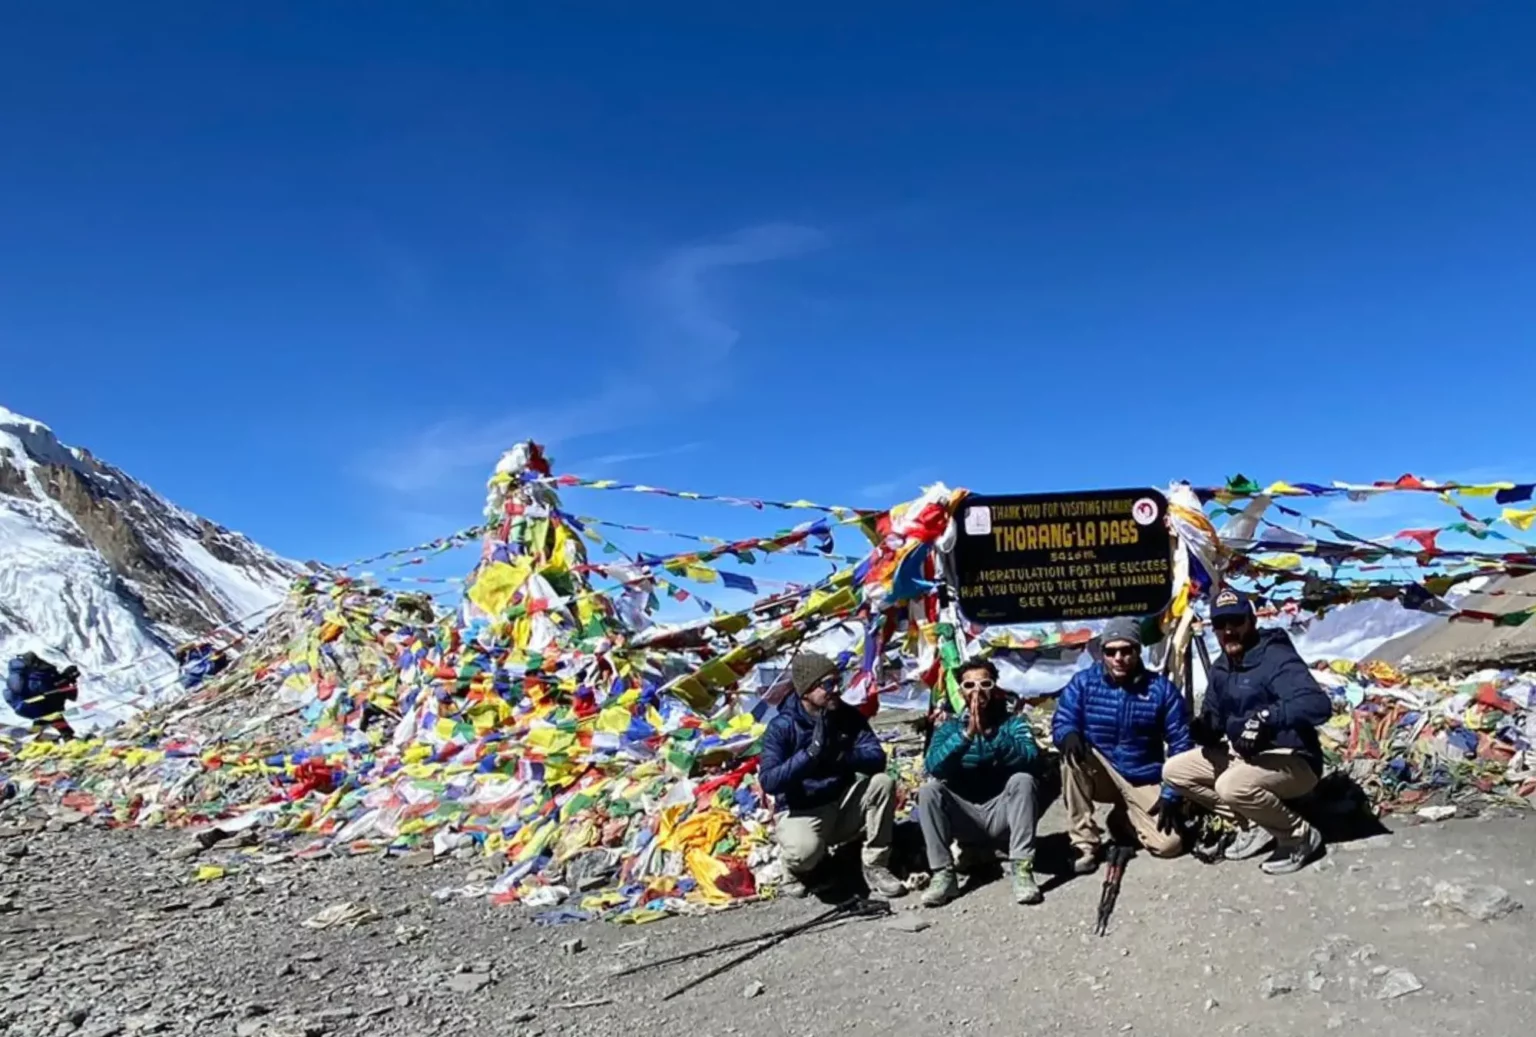 Thorong La Pass Trek - By Mountain People